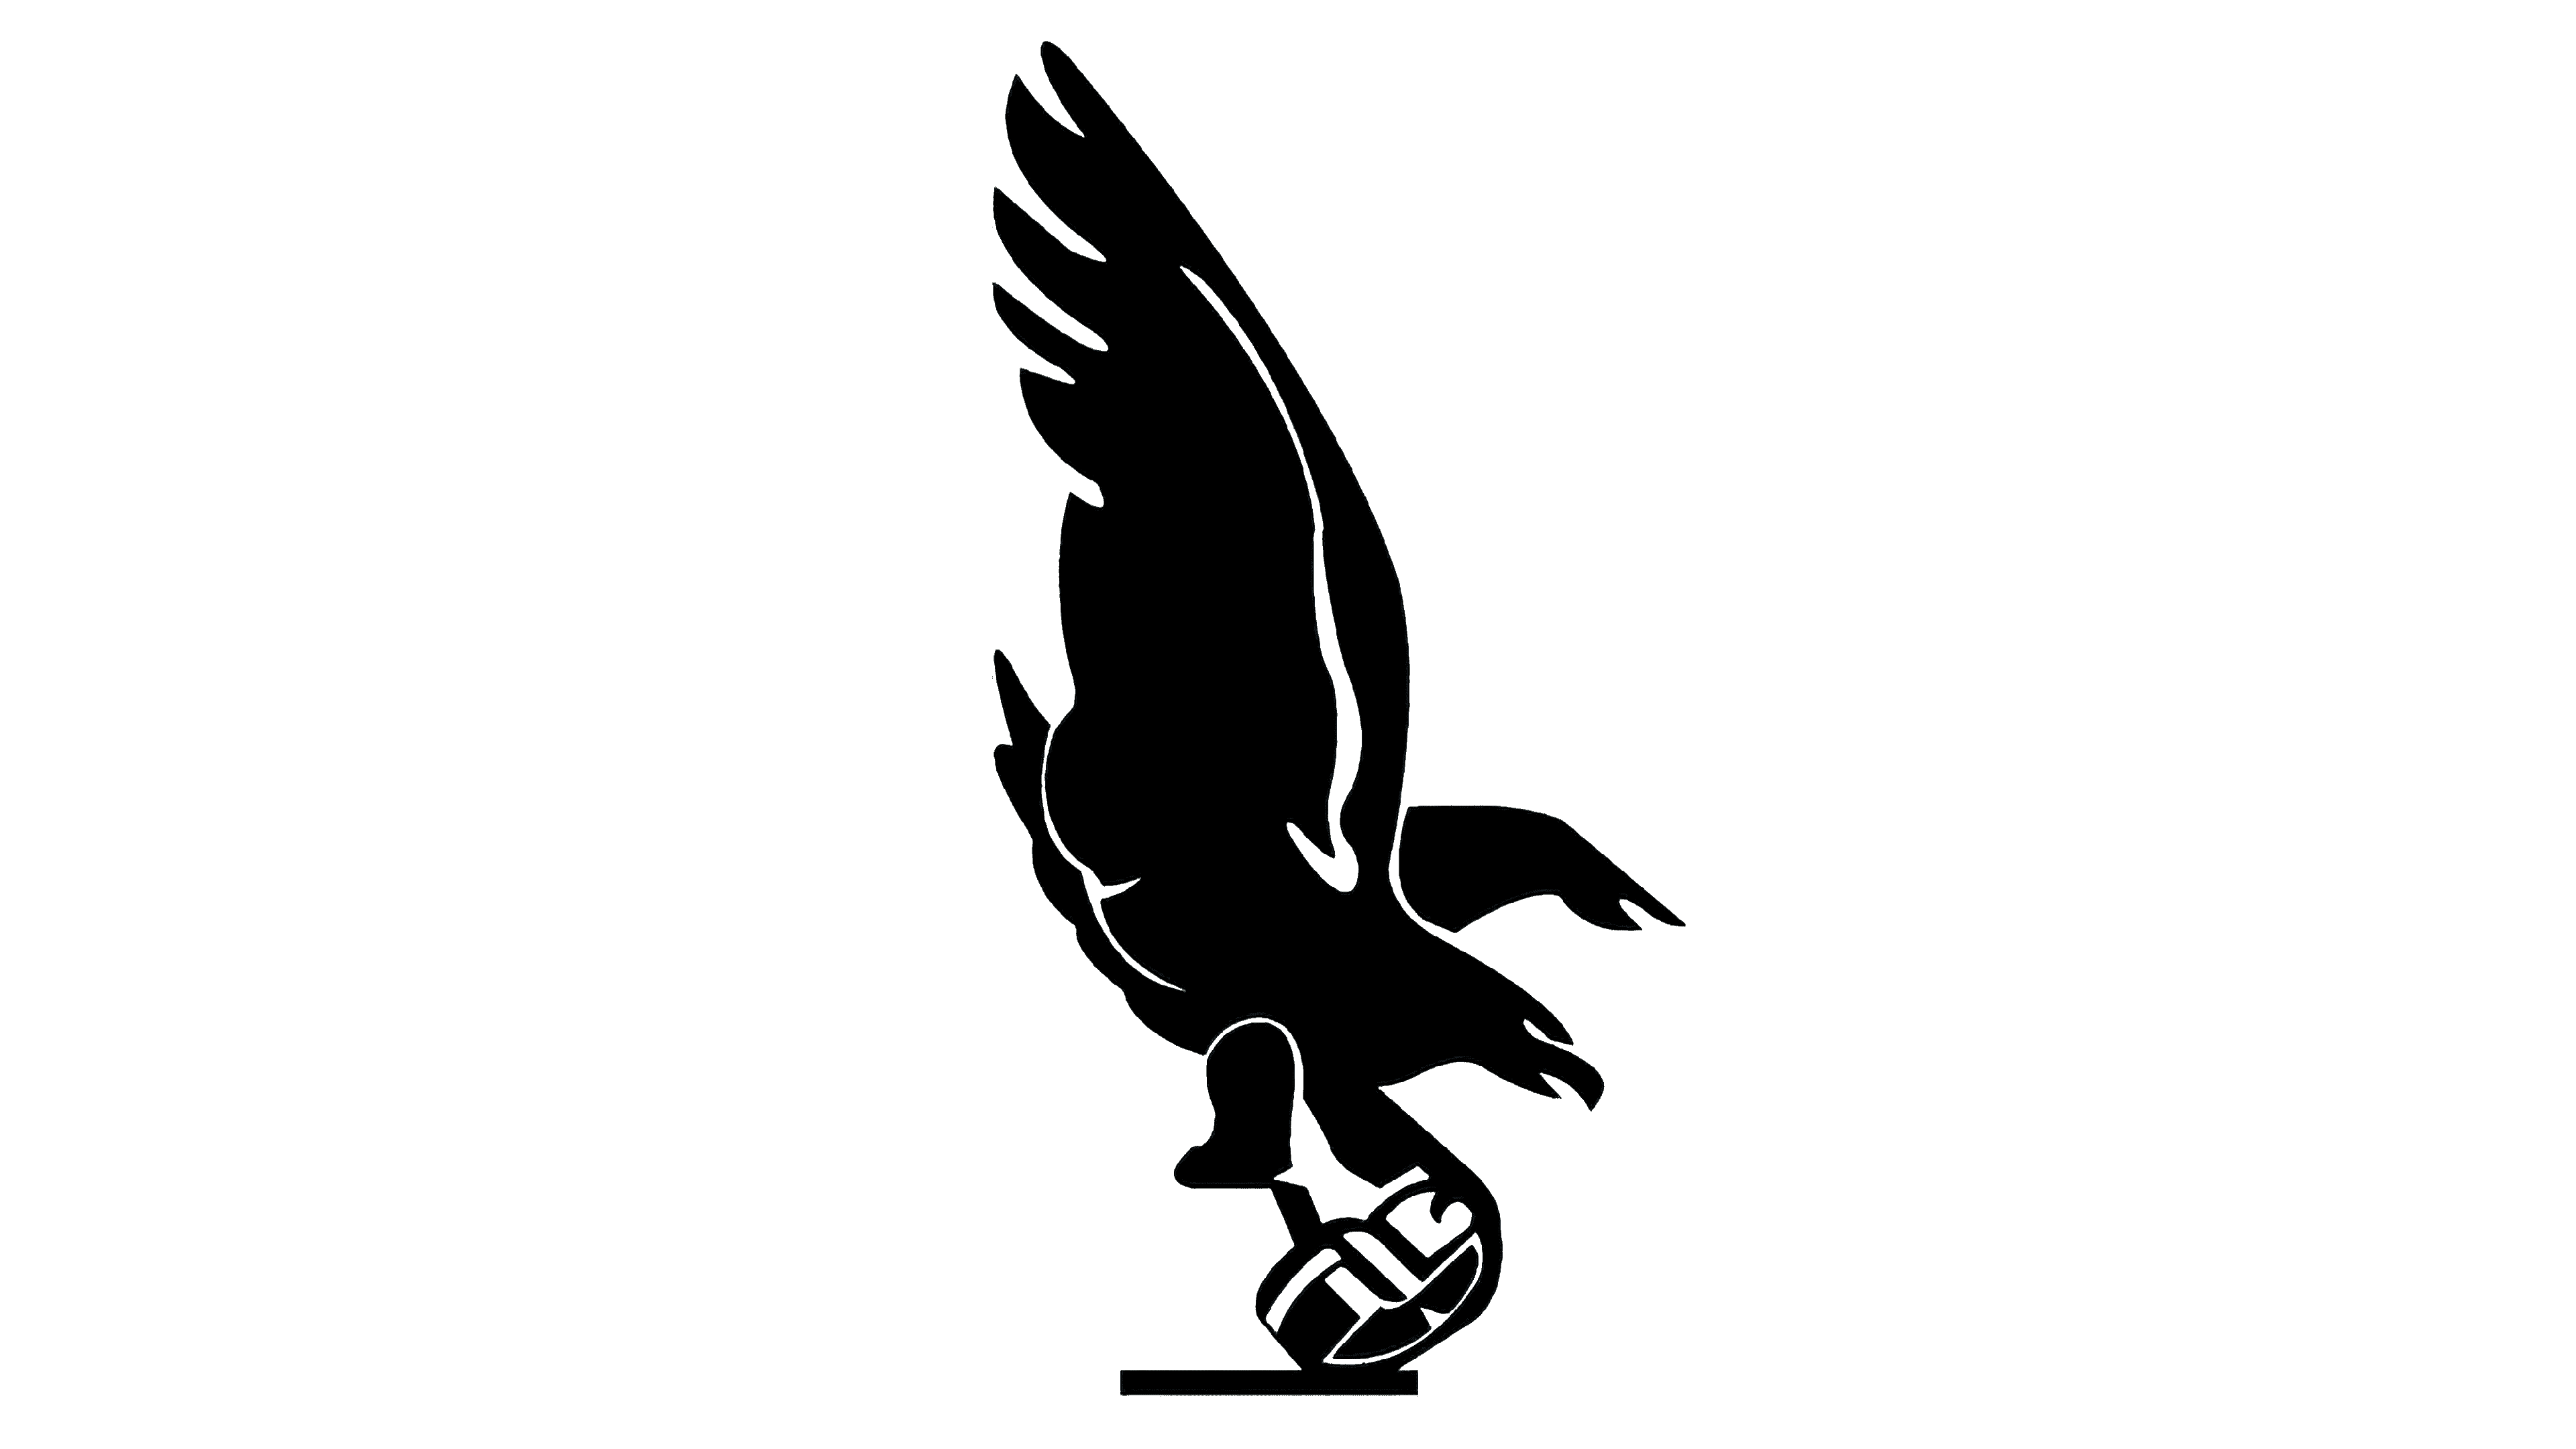 Philadelphia Eagles Logo PNG Transparent & SVG Vector - Freebie Supply -  muzejvojvodine.org.rs